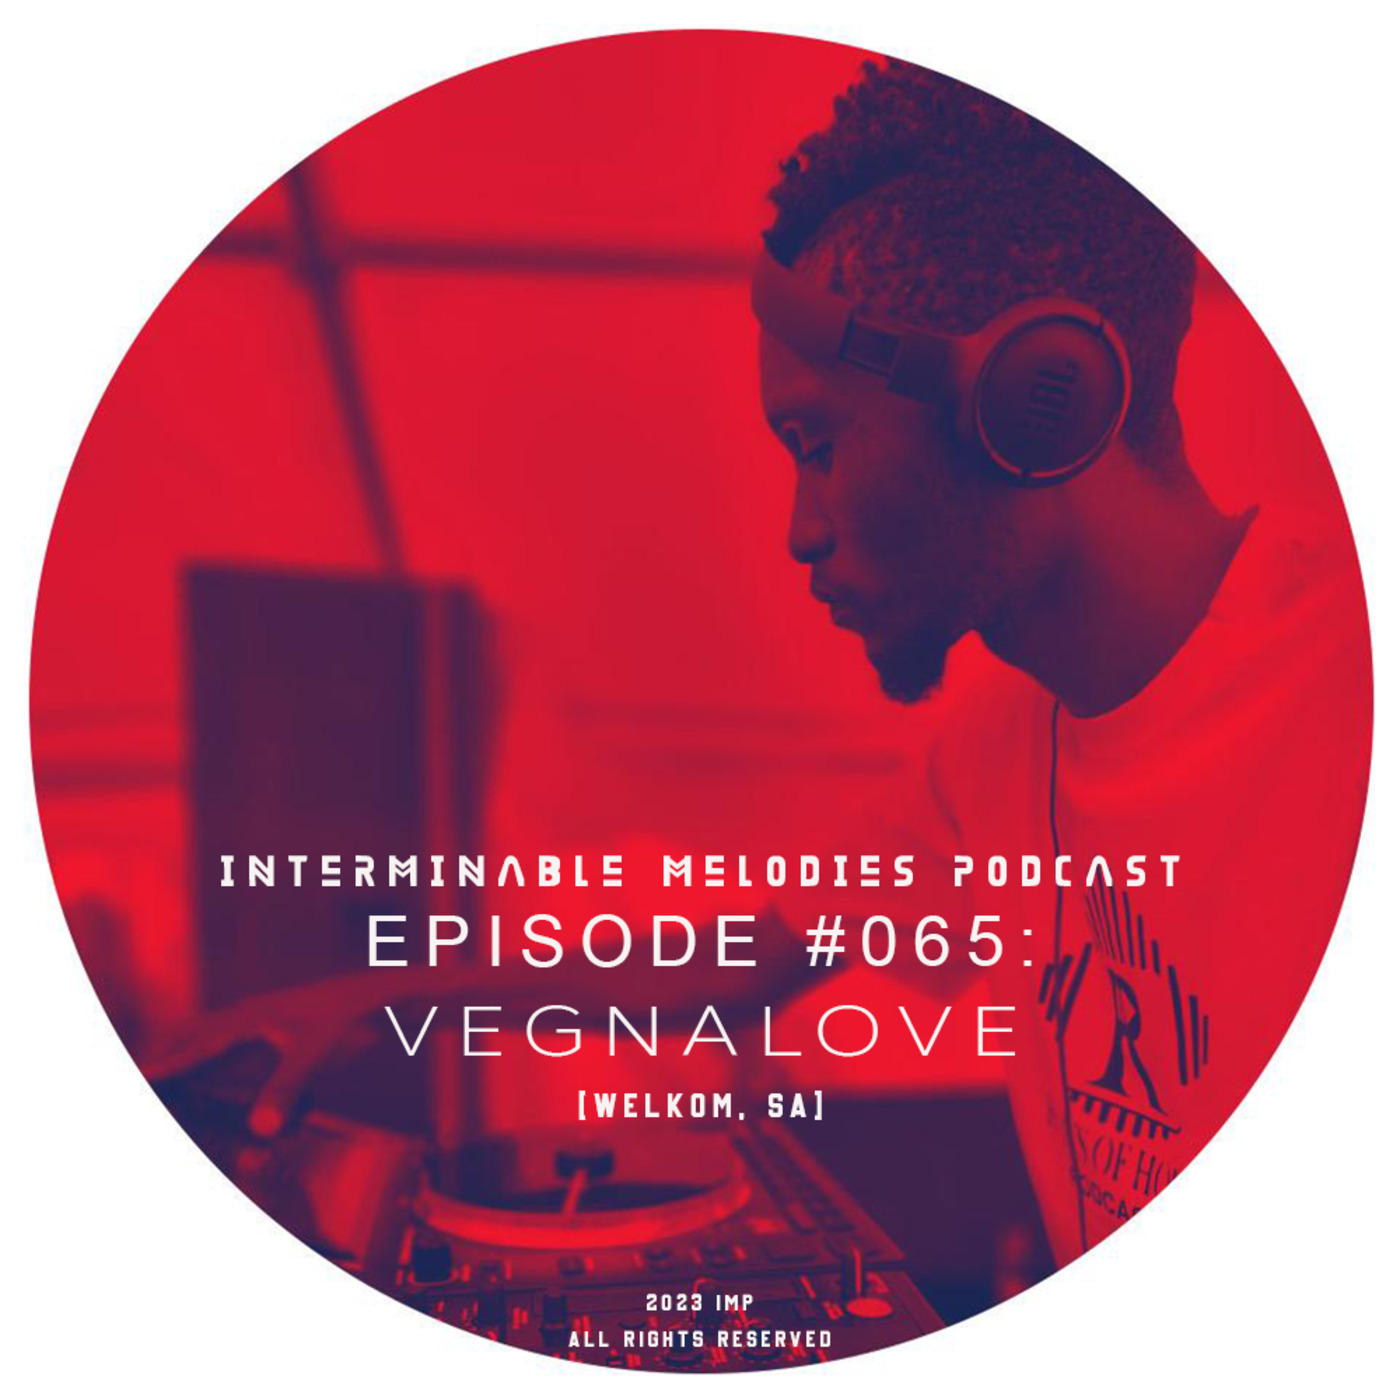 IMP - Episode #065 Guest Mix By Vegnalove (Welkom, SA)